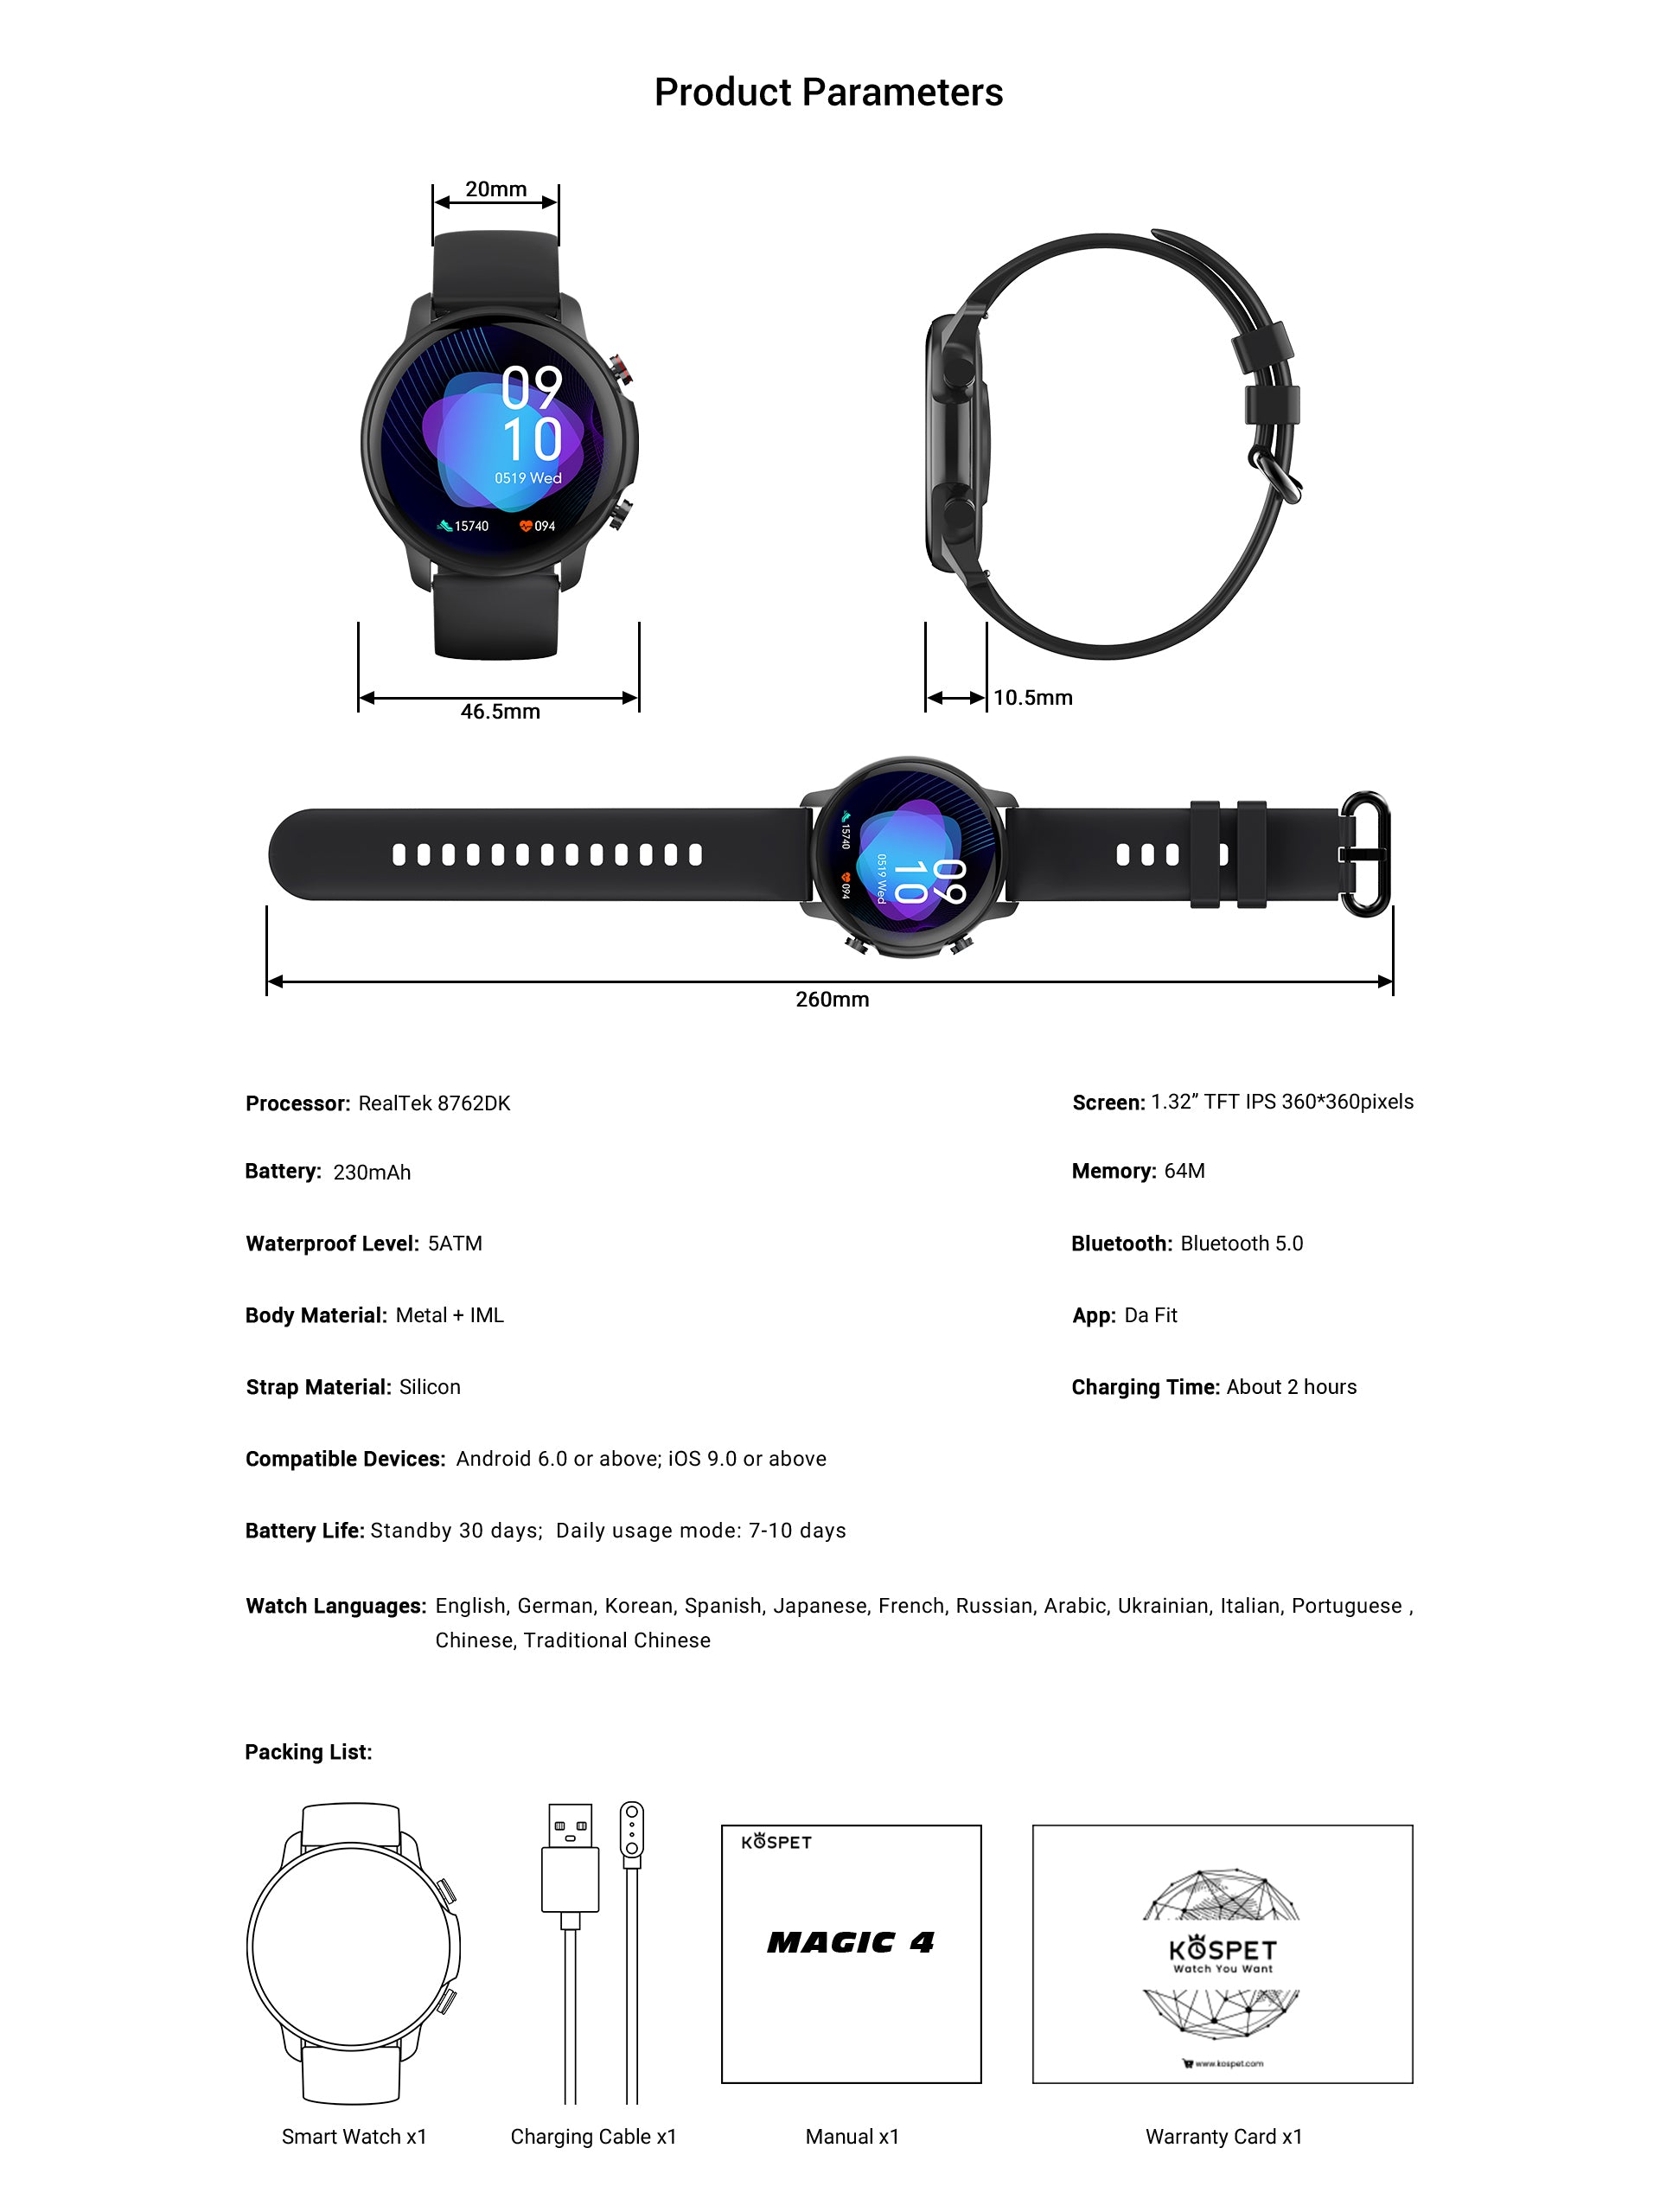 KOSPET MAGIC 4 Smartwatch